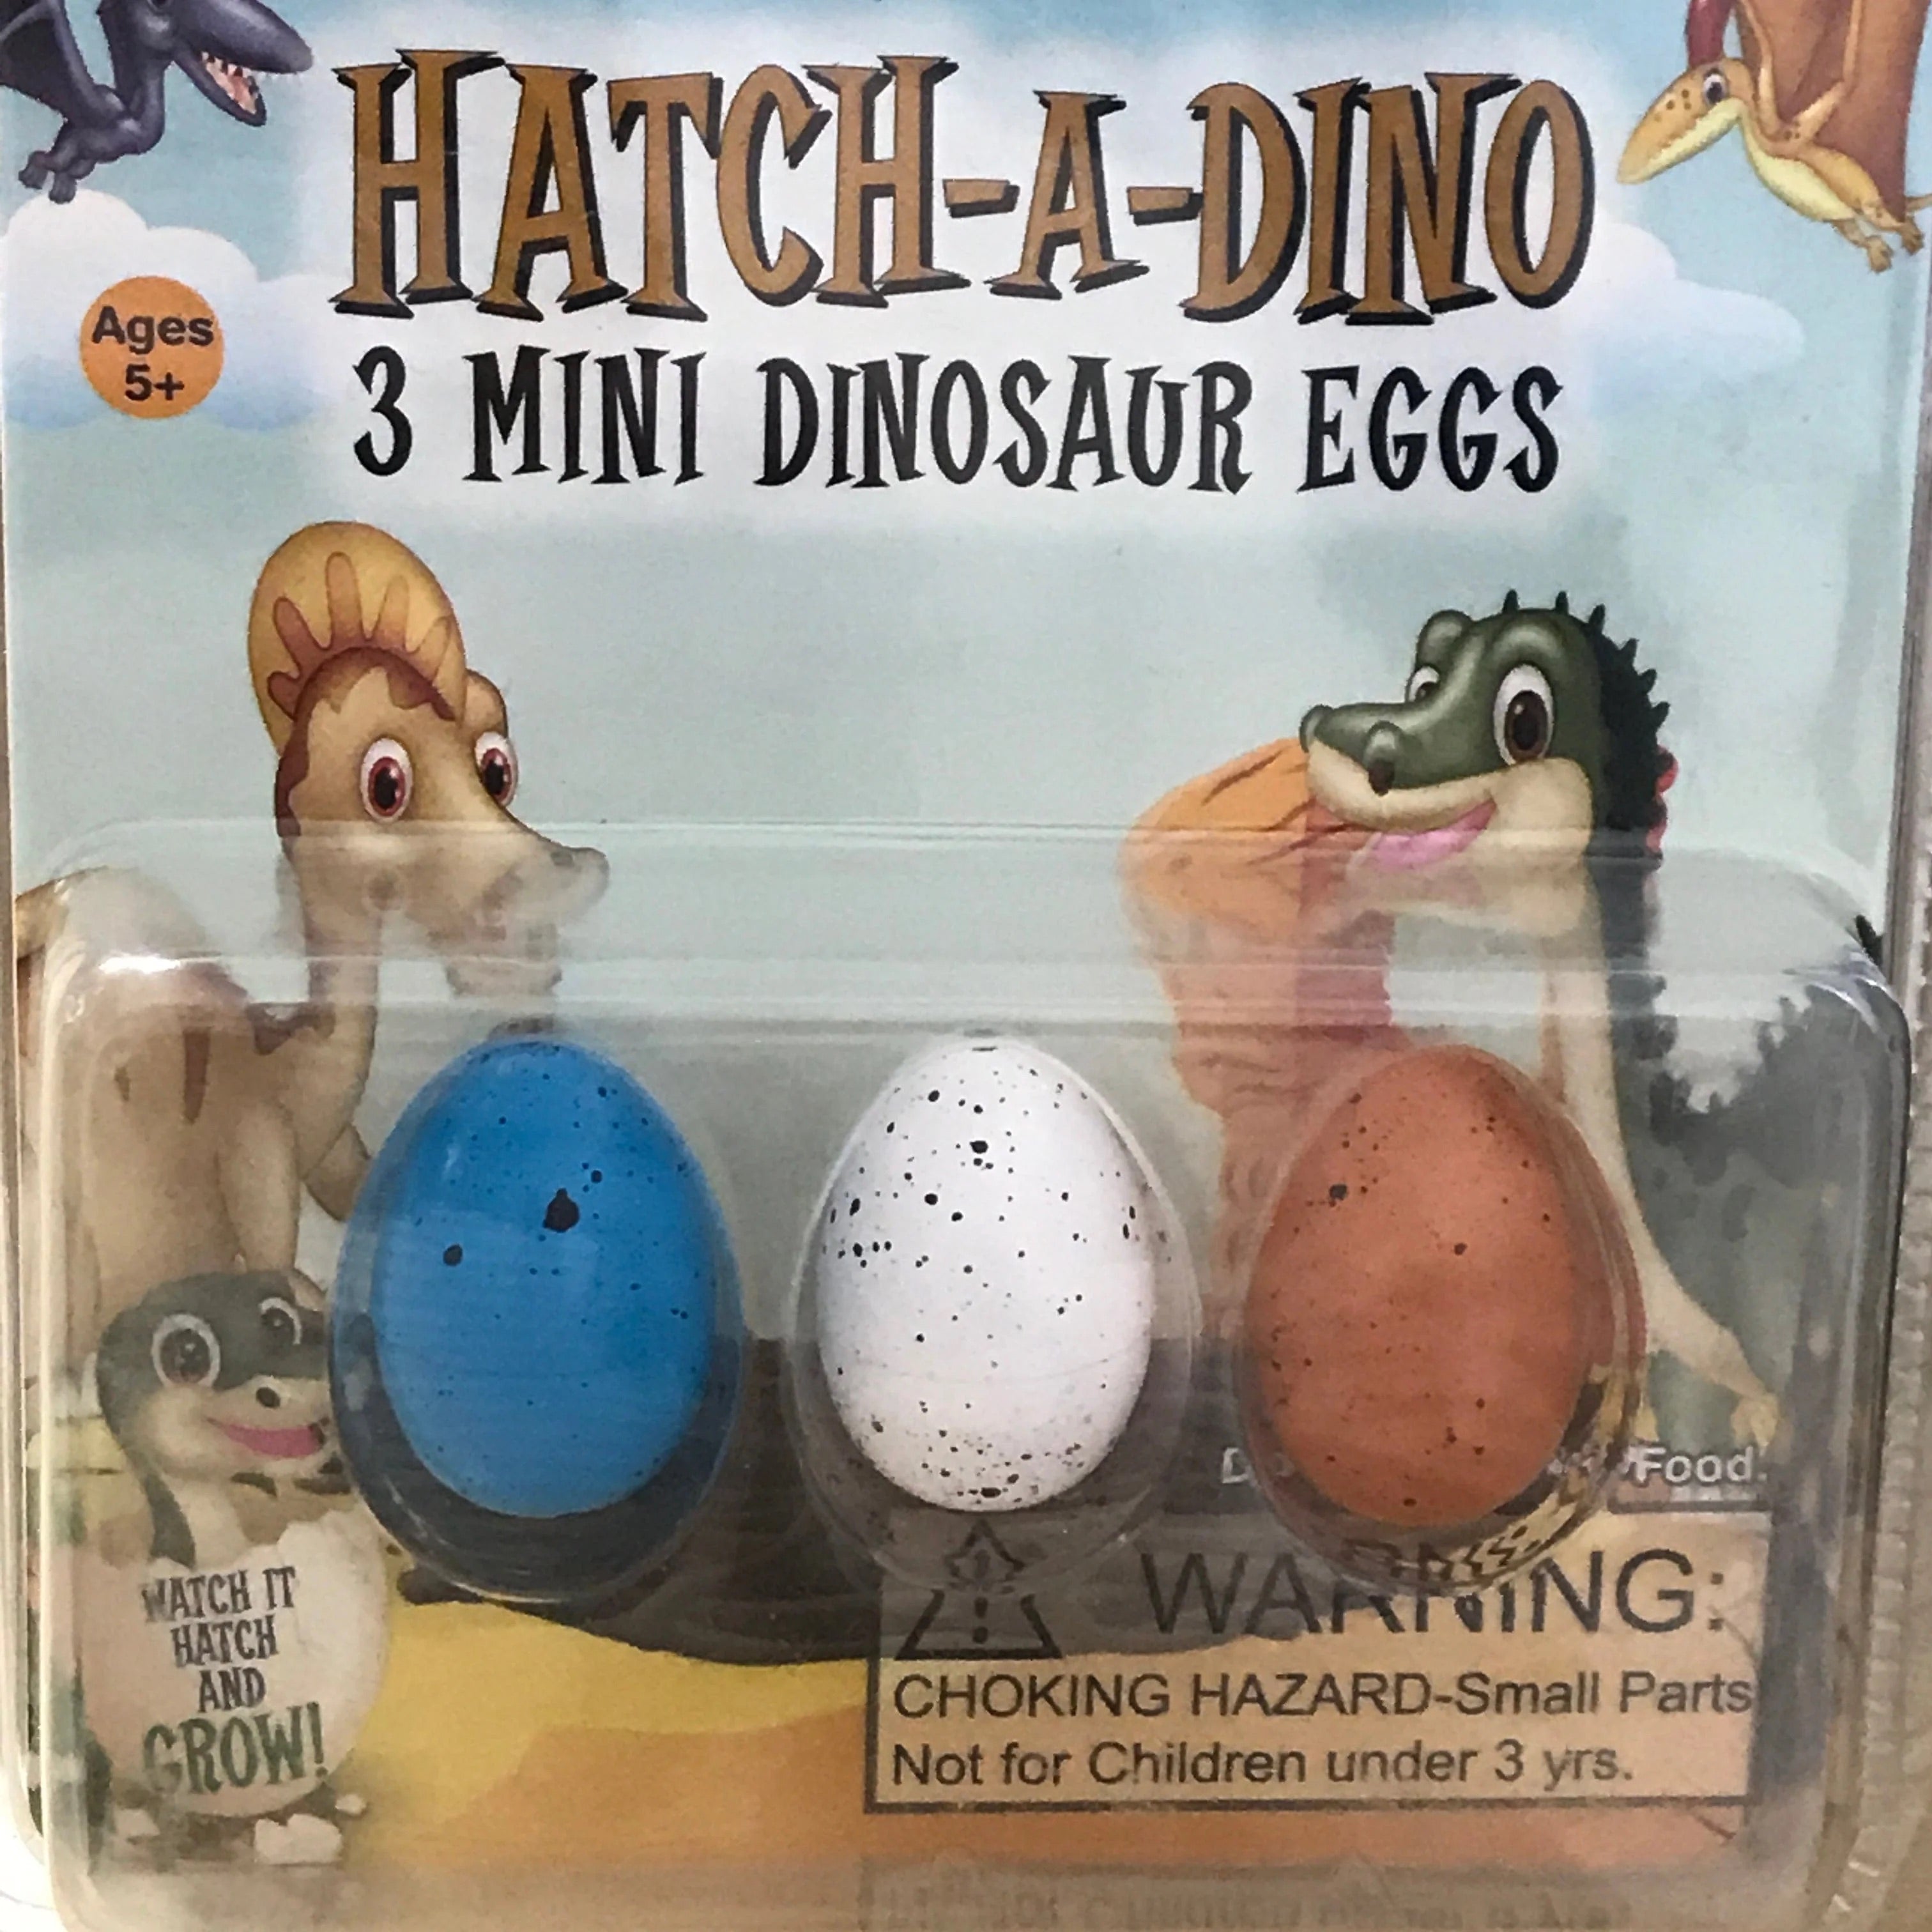 Hatch-A-Dino 3 Mini Dinosaur Eggs by Zorbitz #2030